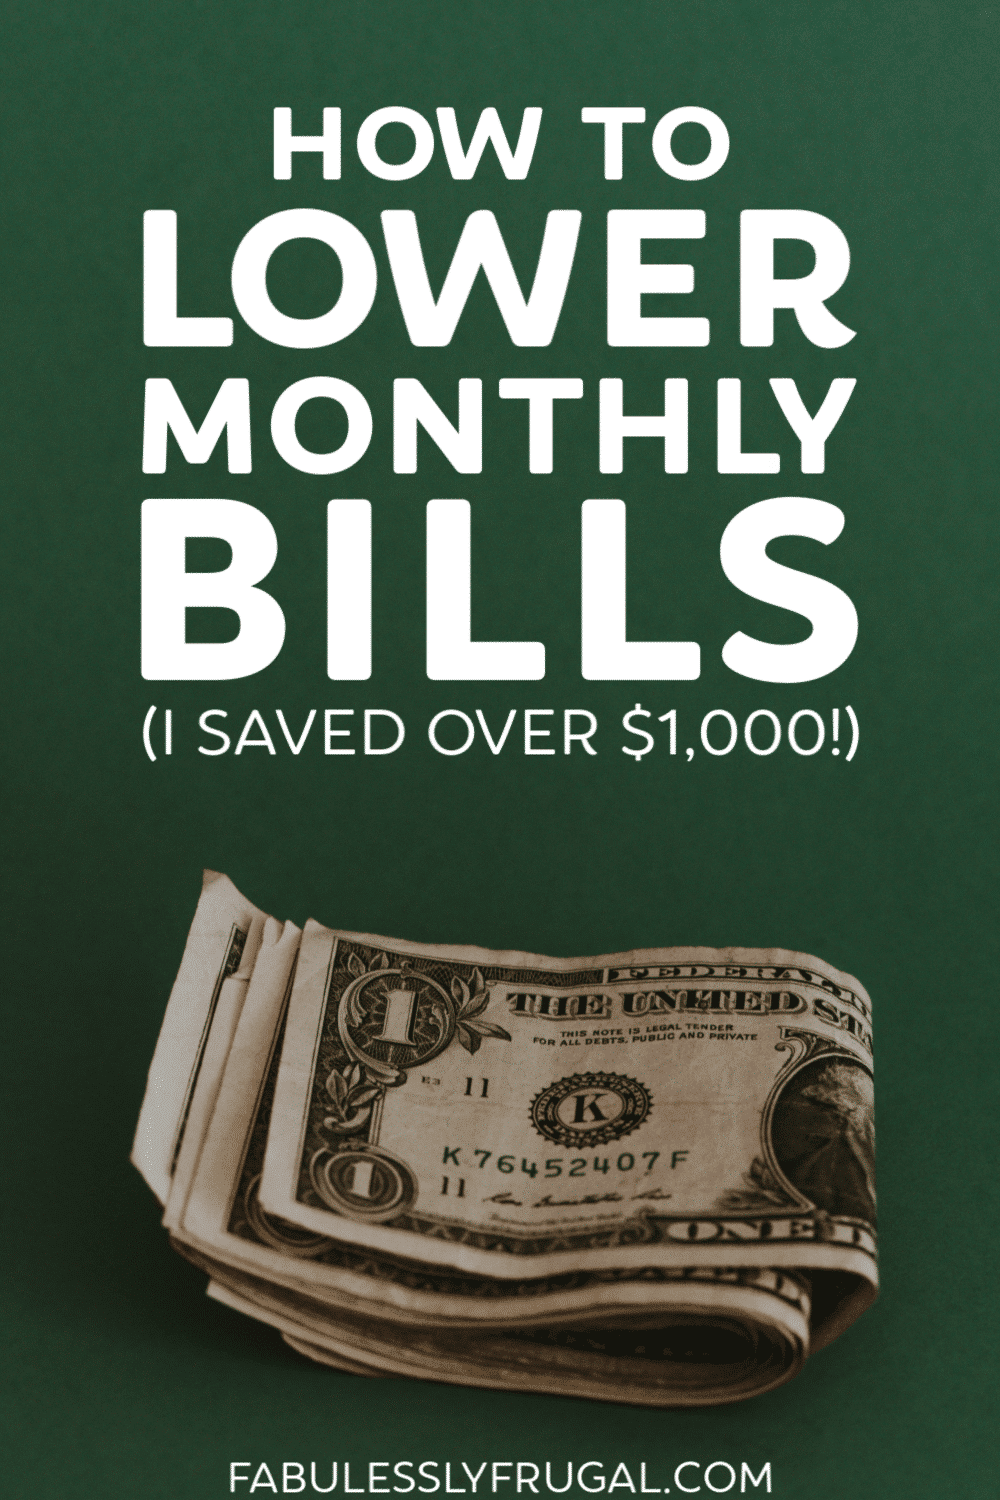 Lower monthly bills